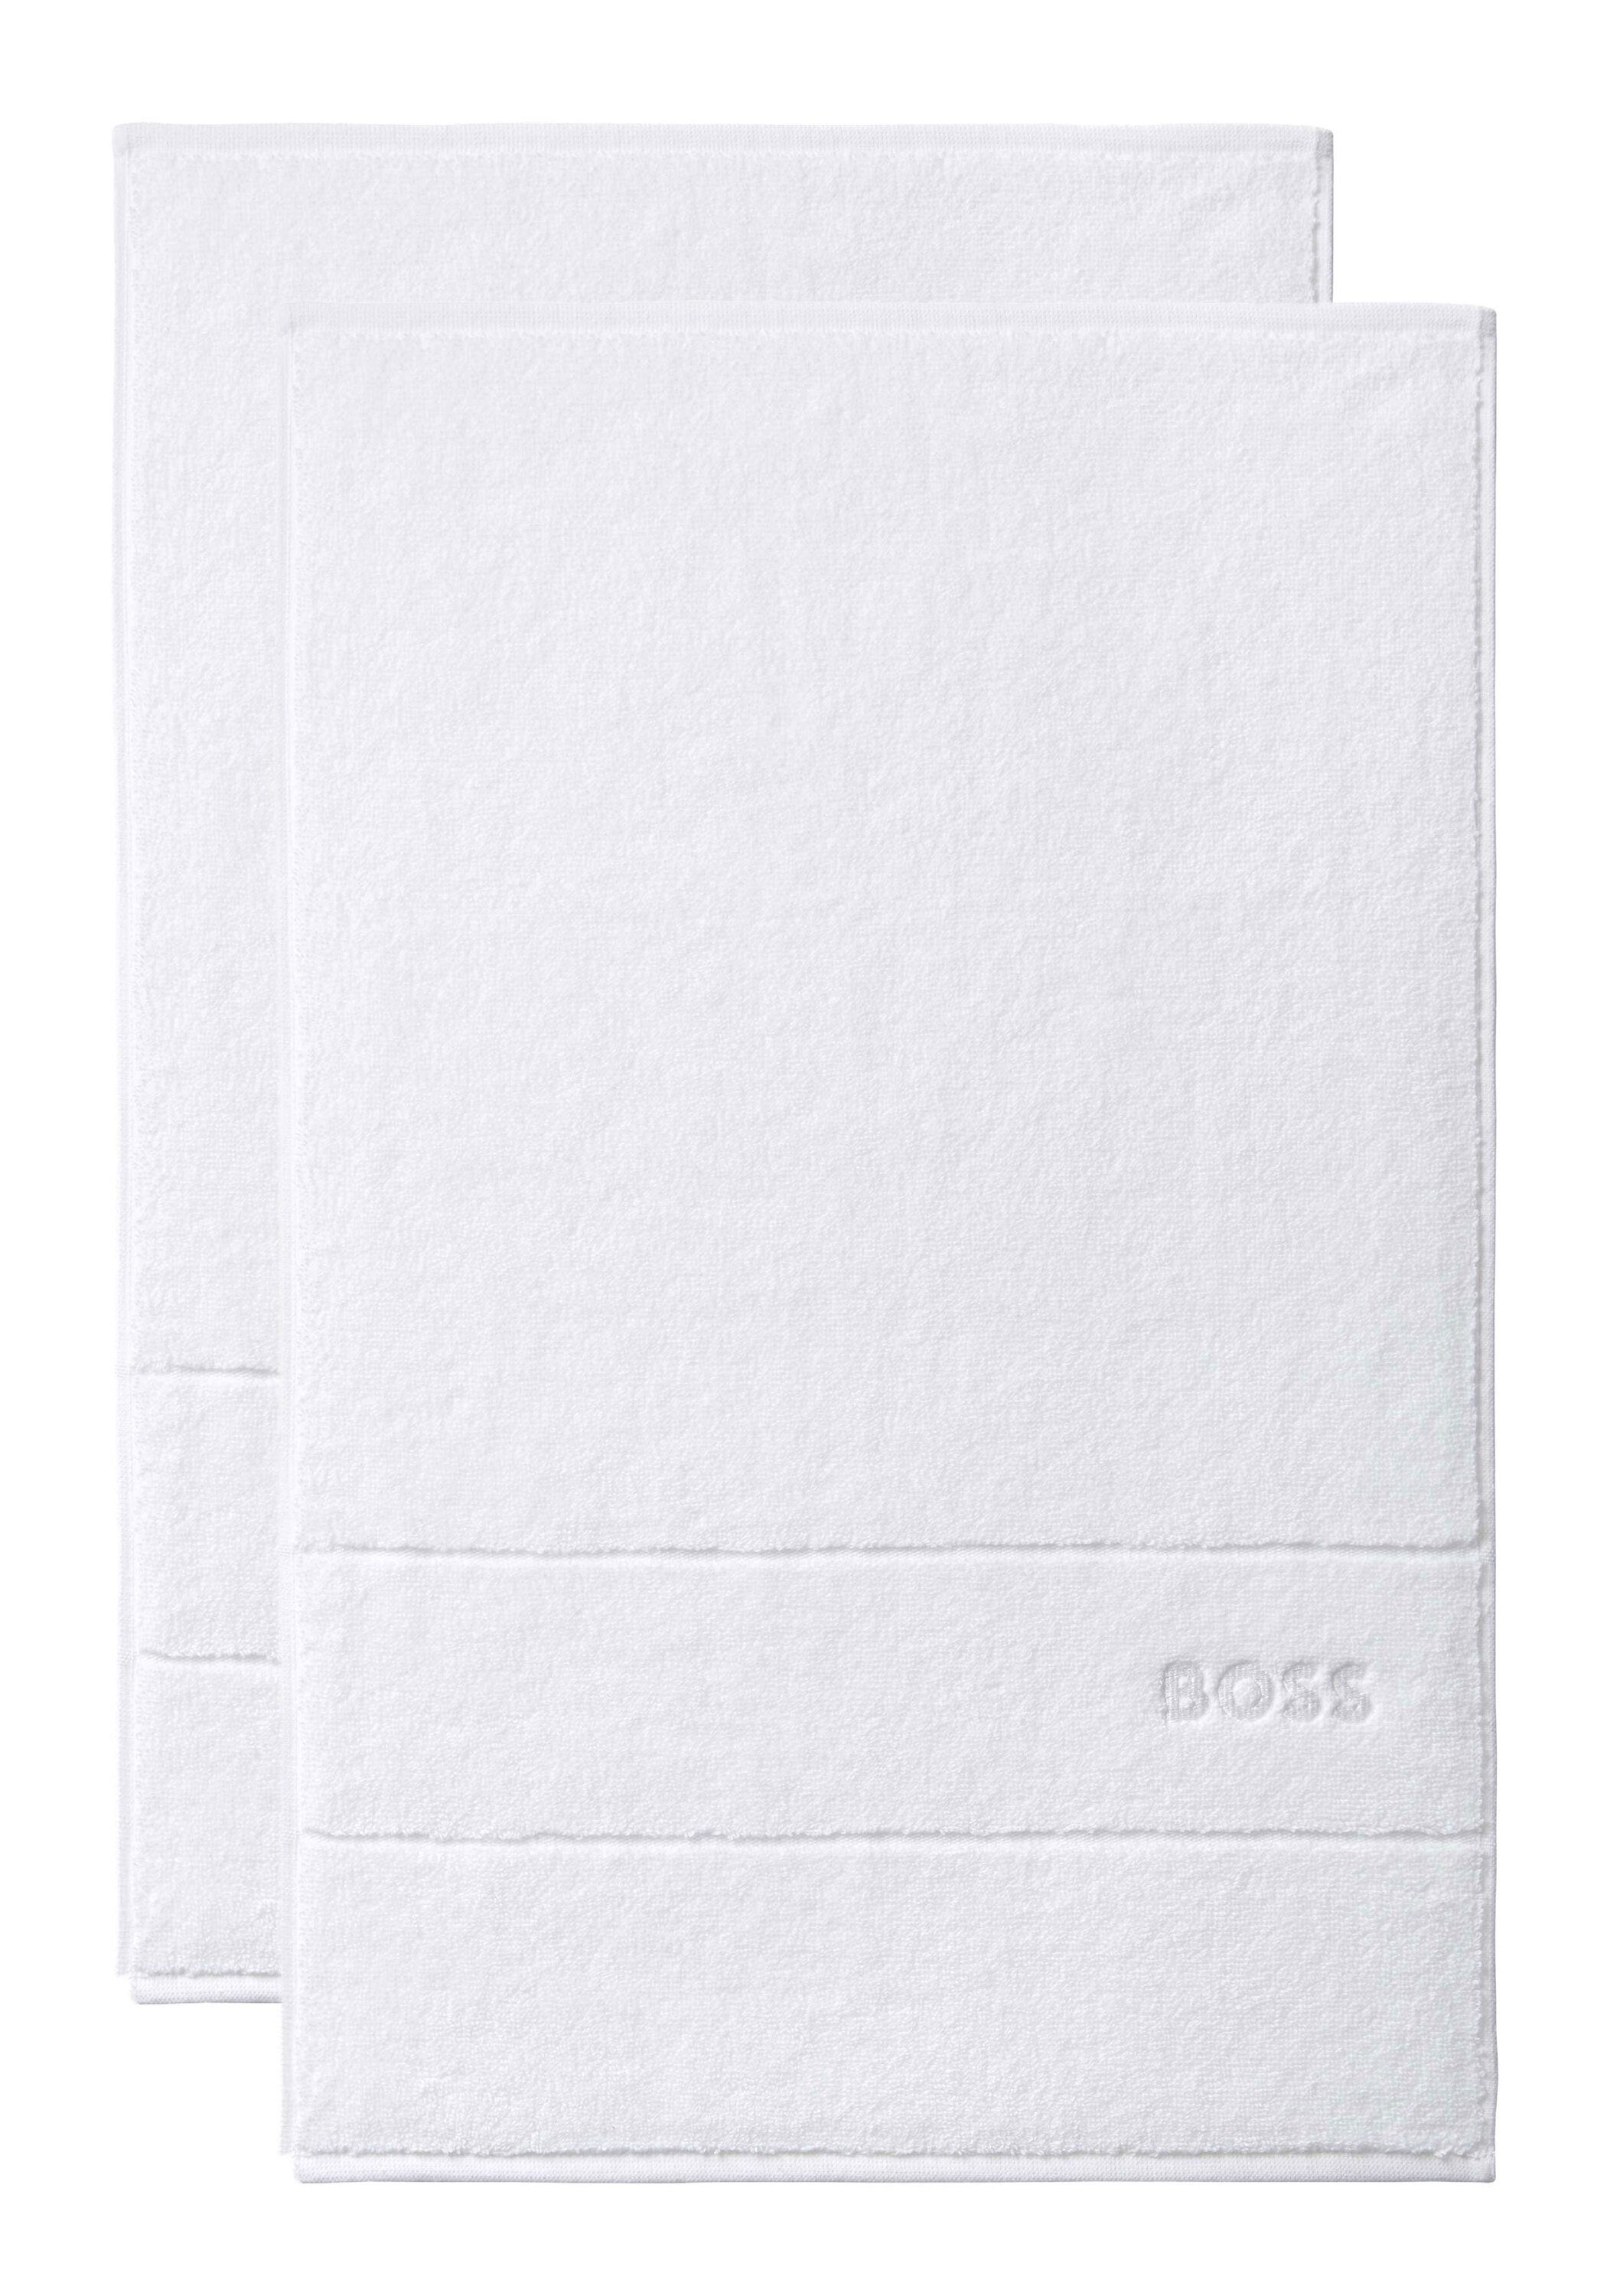 Hugo Boss Home Gästehandtücher PLAIN (2tlg), 100% Baumwolle, mit modernem Design ICEN